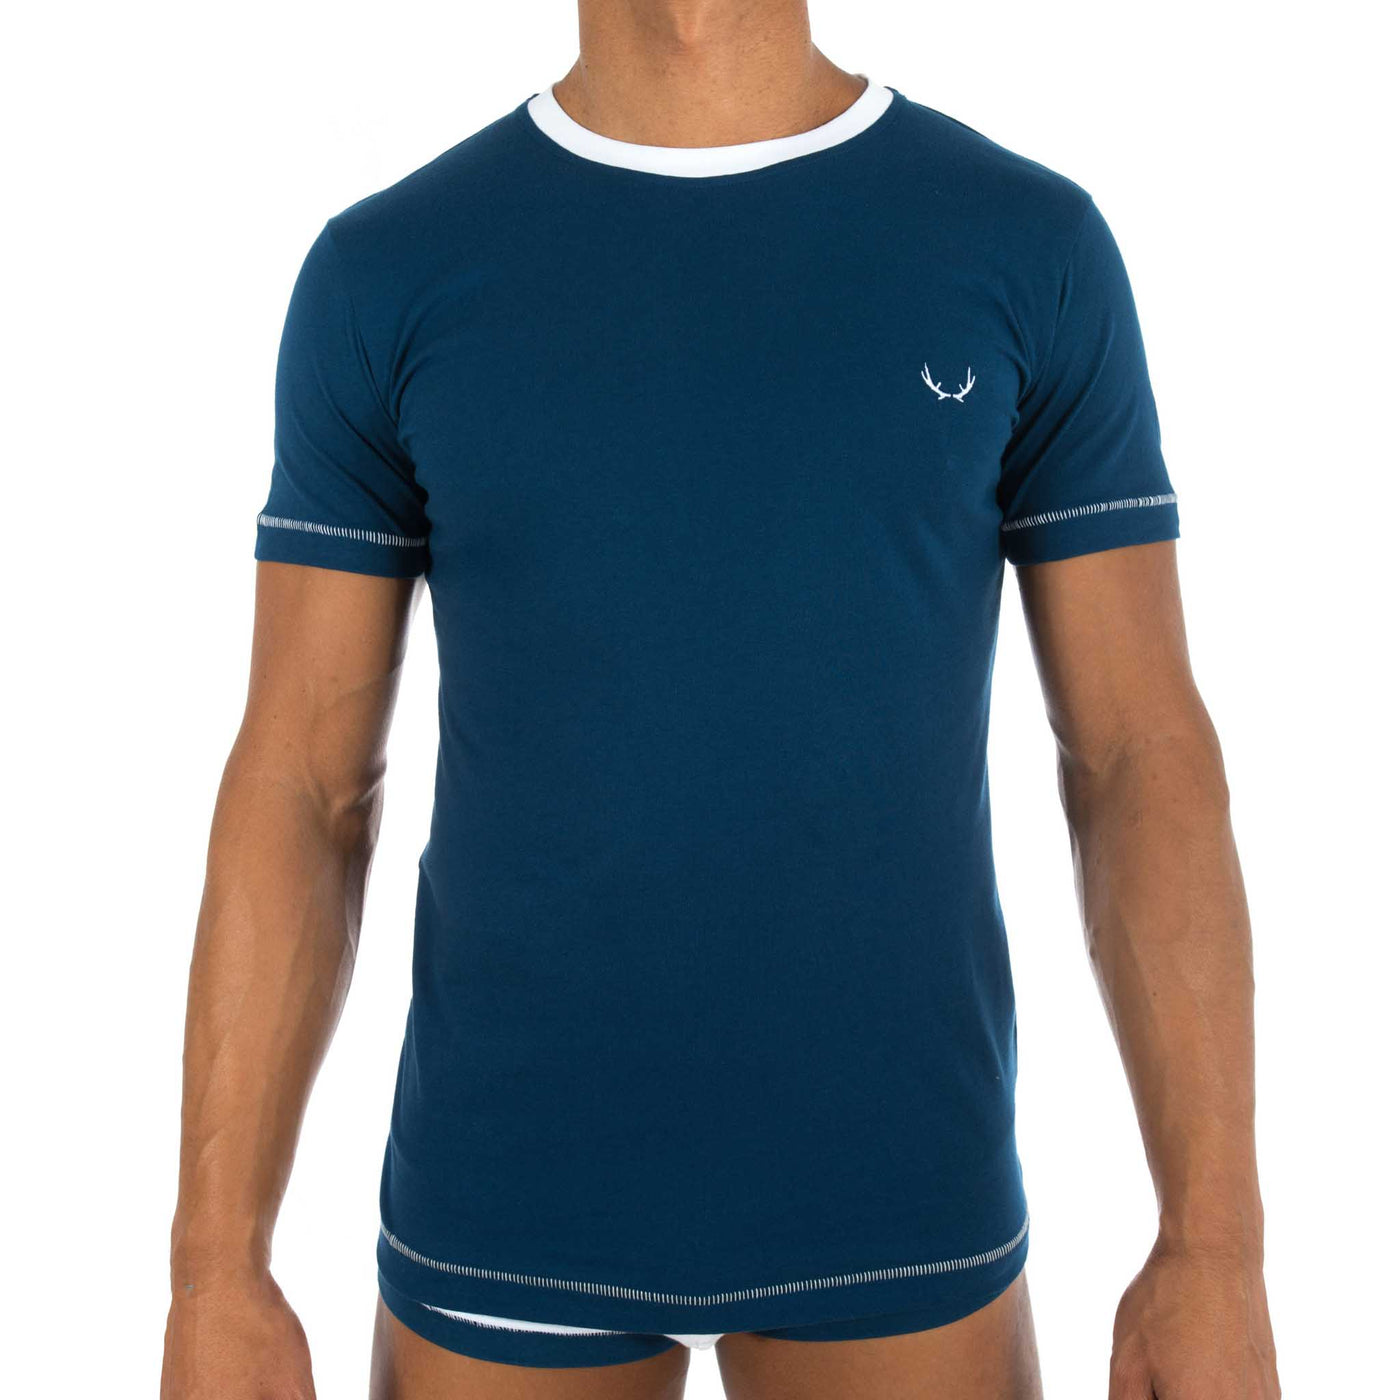 Navy blue organic cotton round neck t-shirt for men